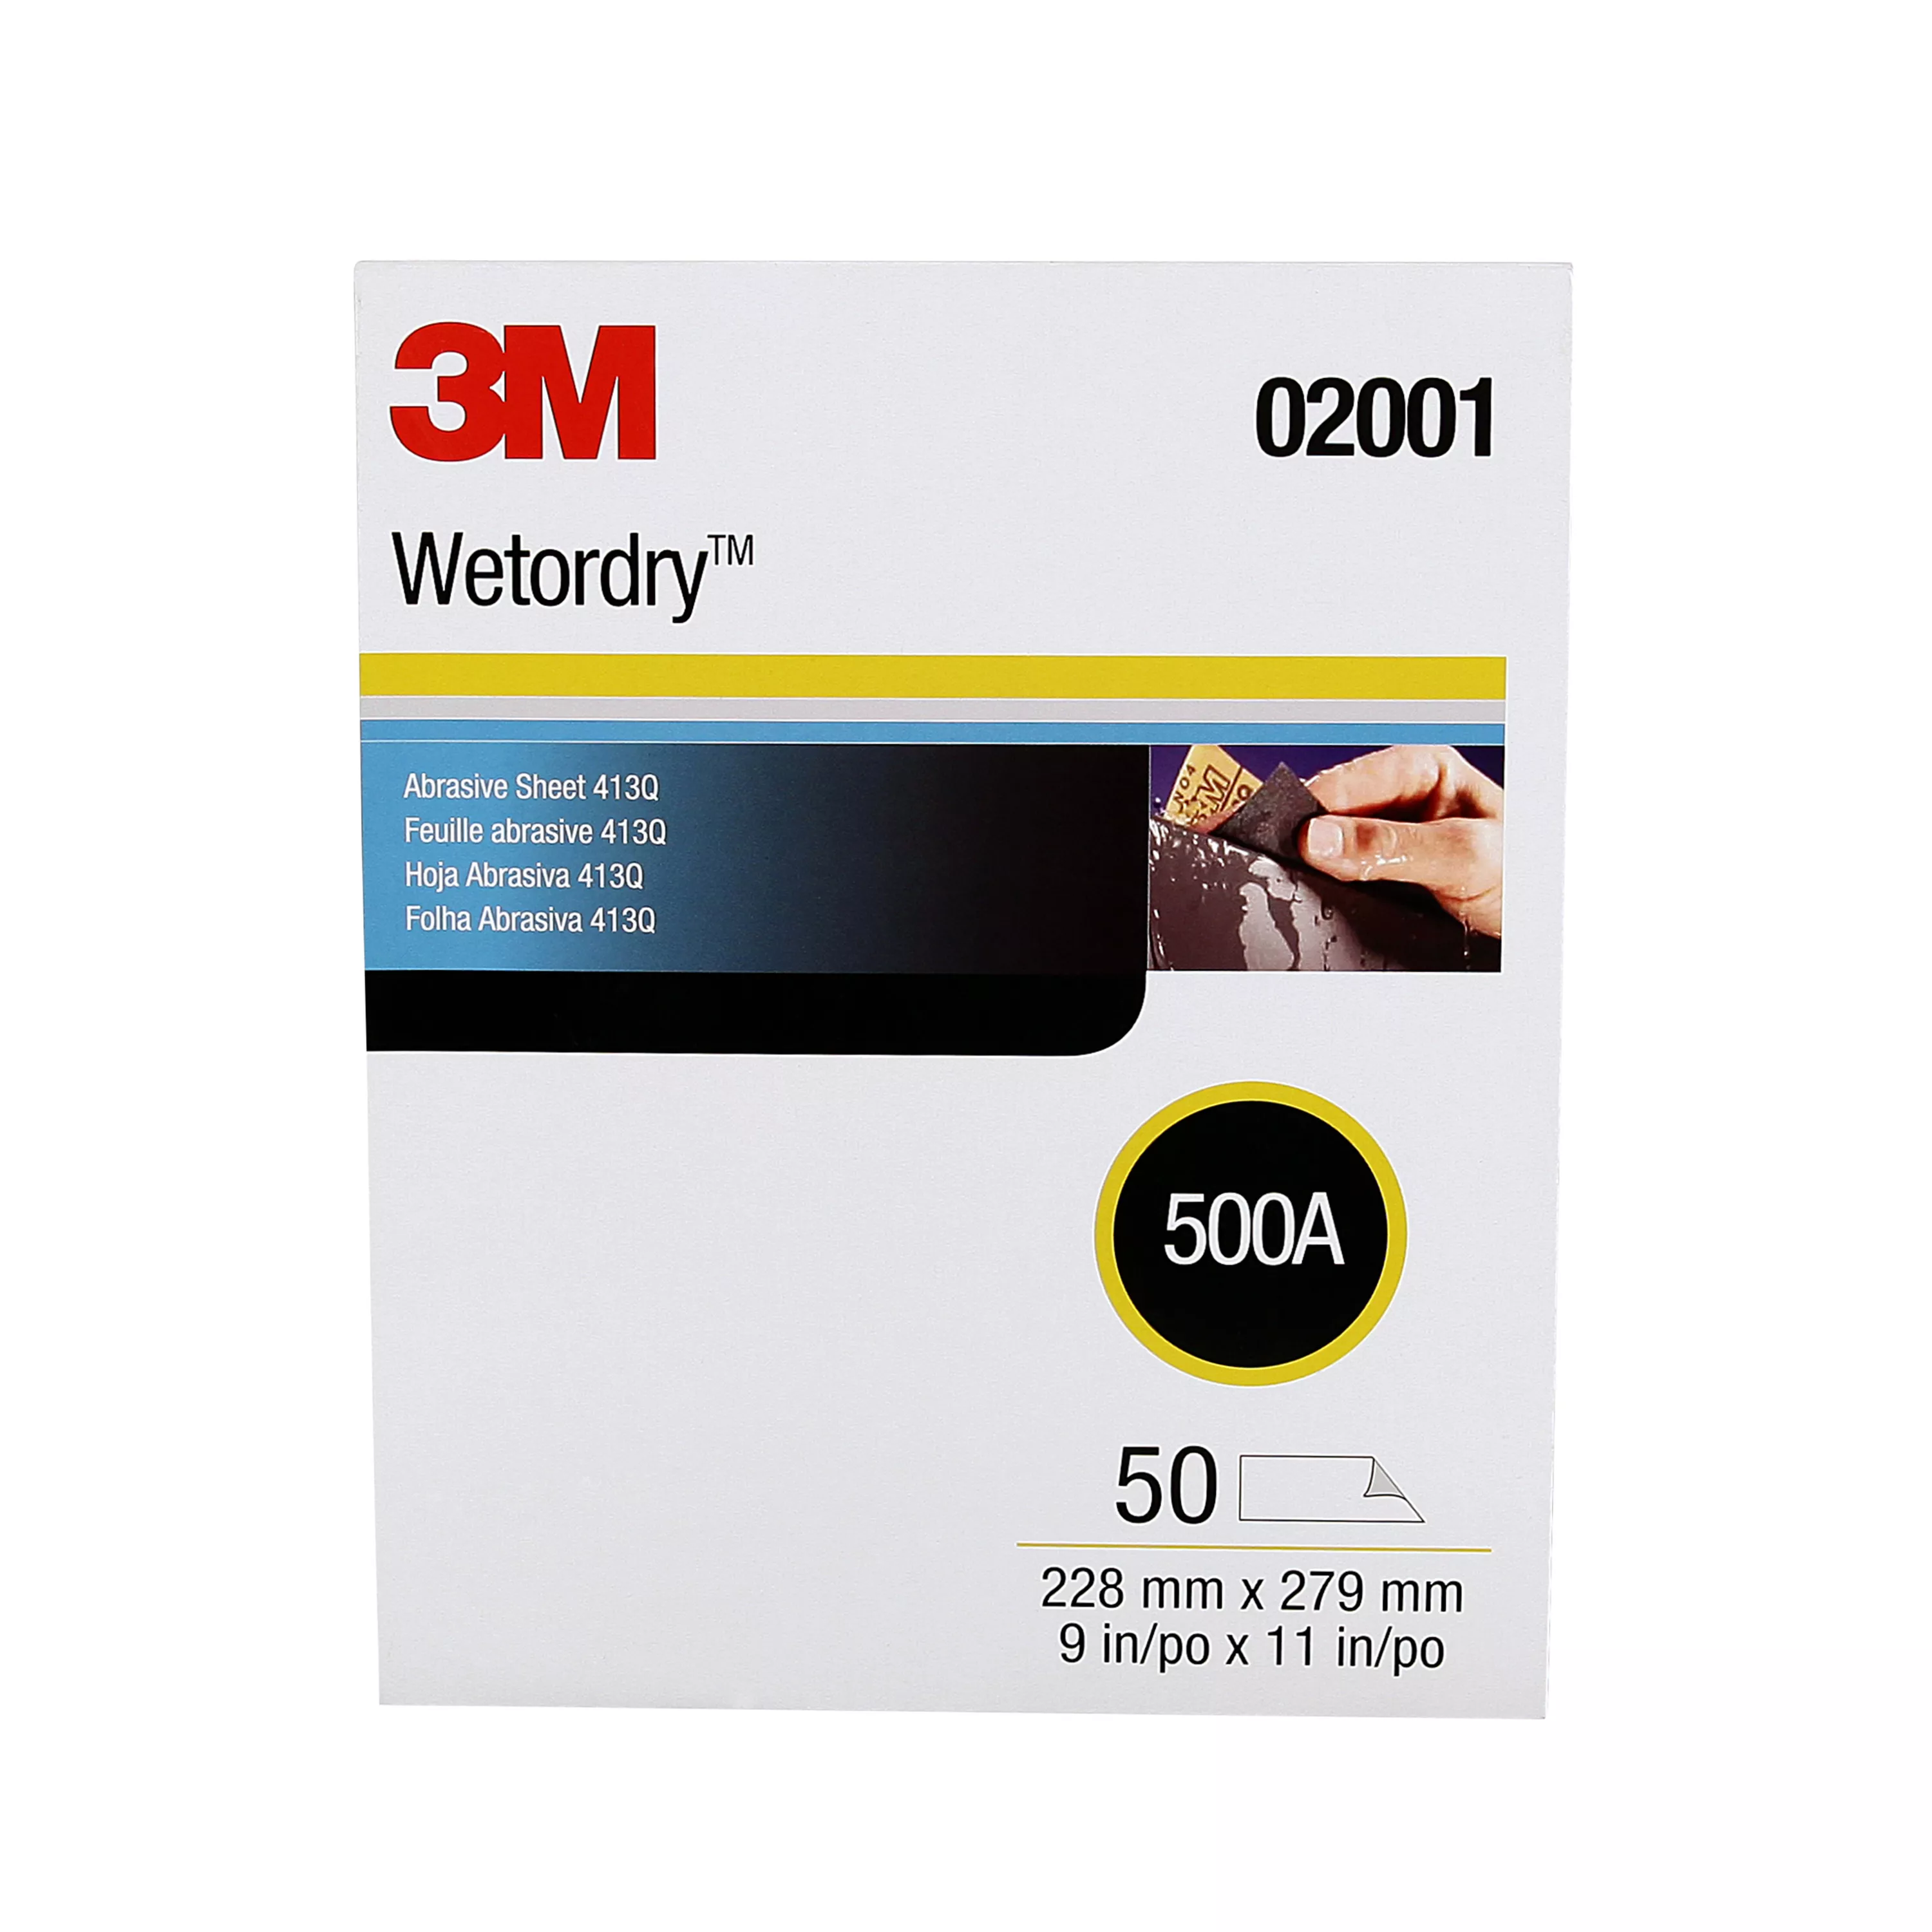 SKU 7000118291 | 3M™ Wetordry™ Abrasive Sheet 413Q